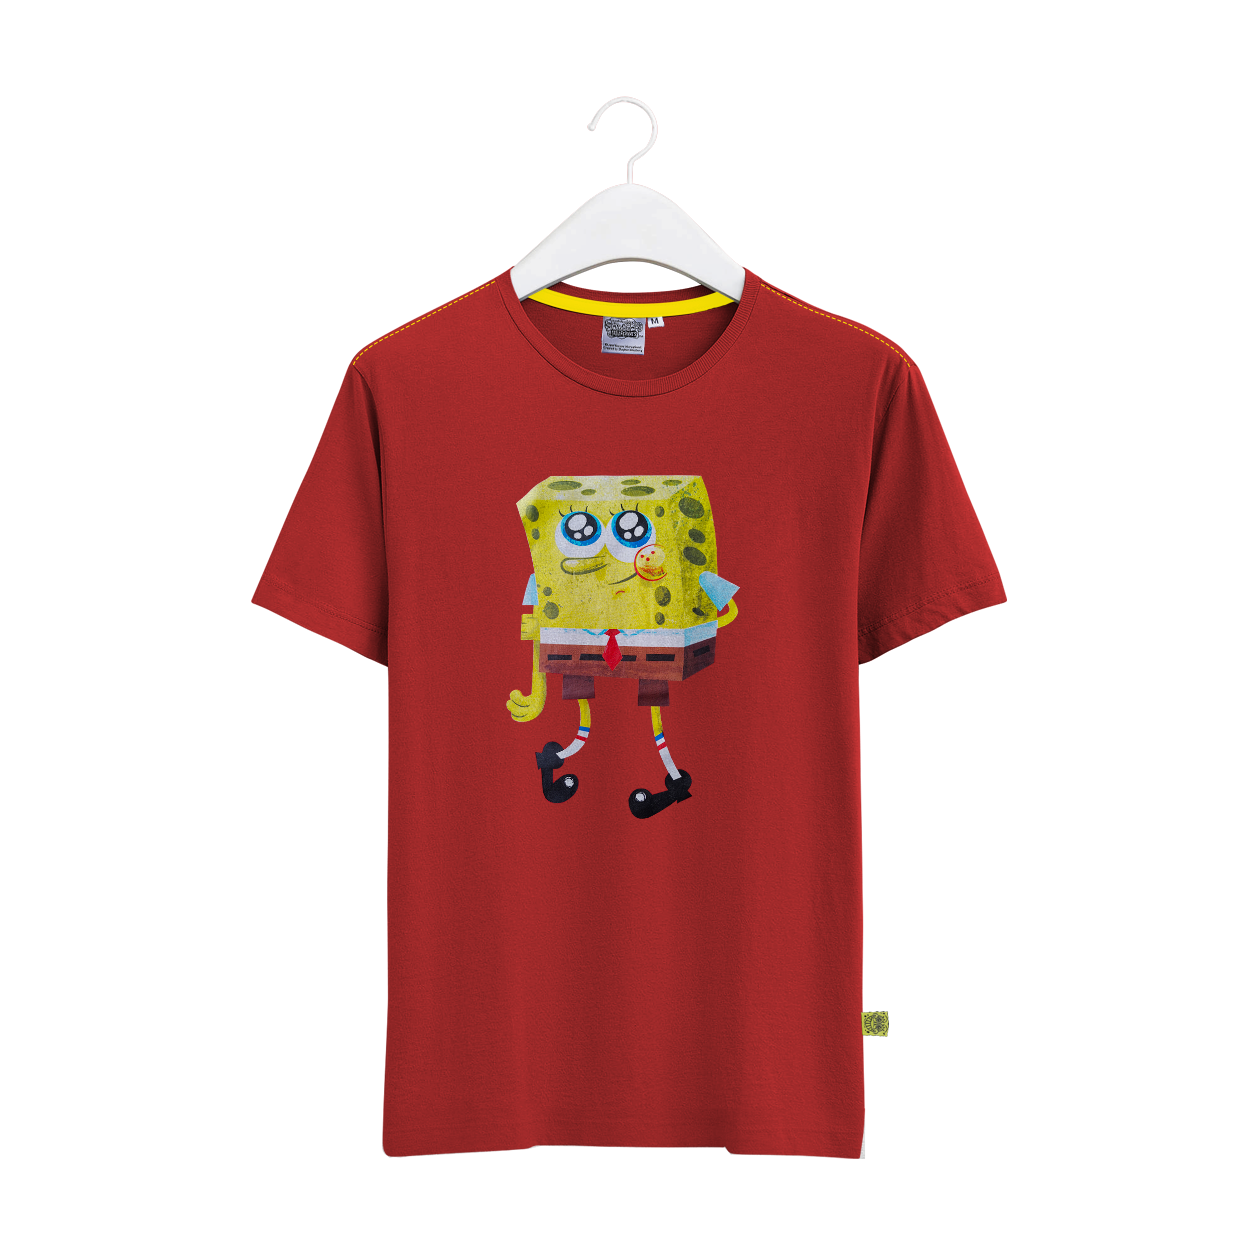 red spongebob shirt